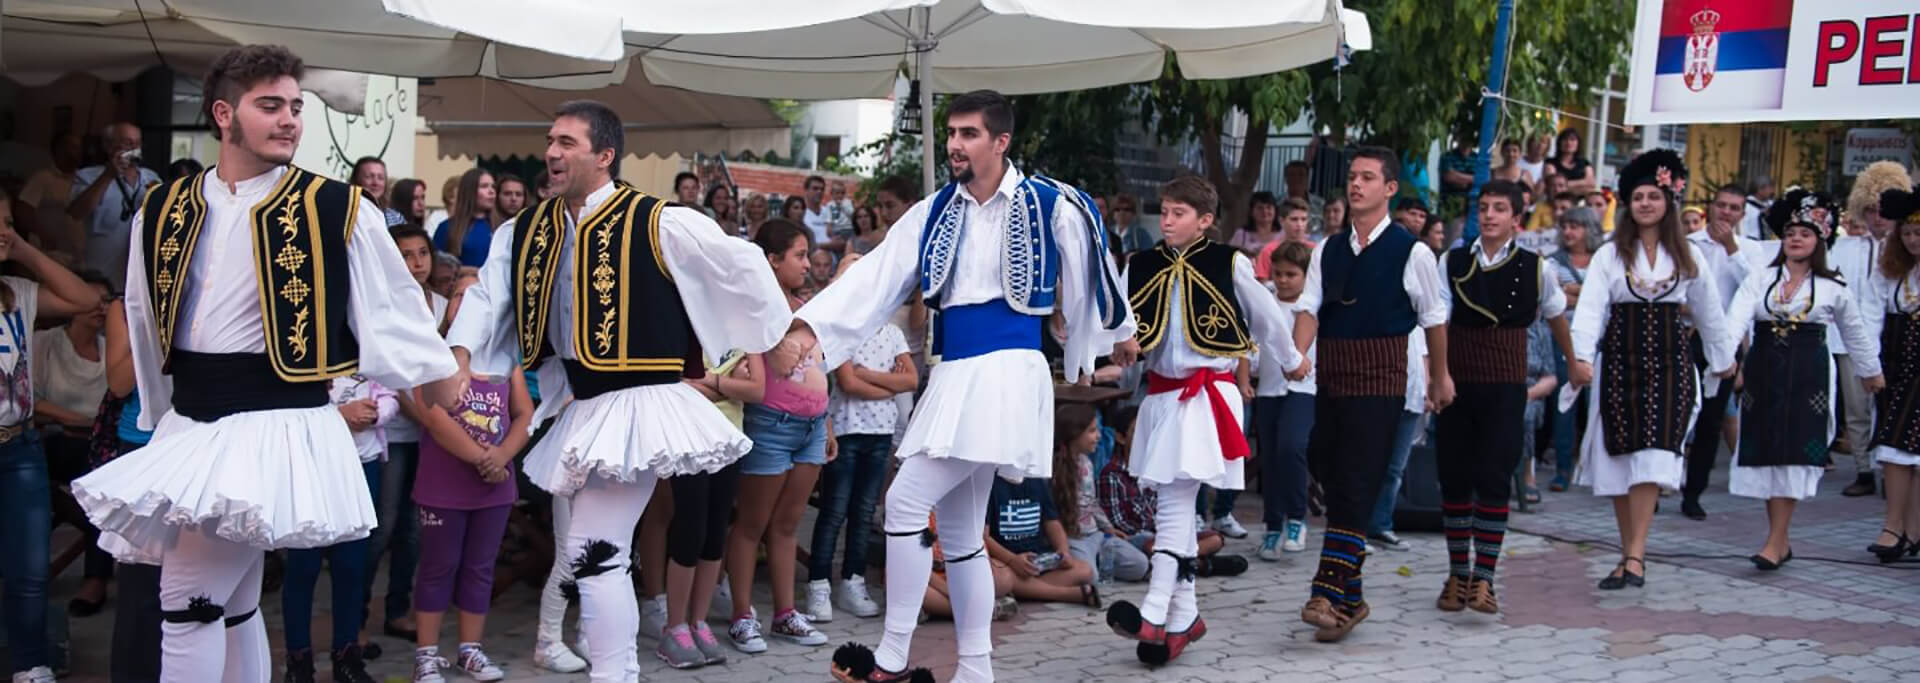 Tampa Greek Festival